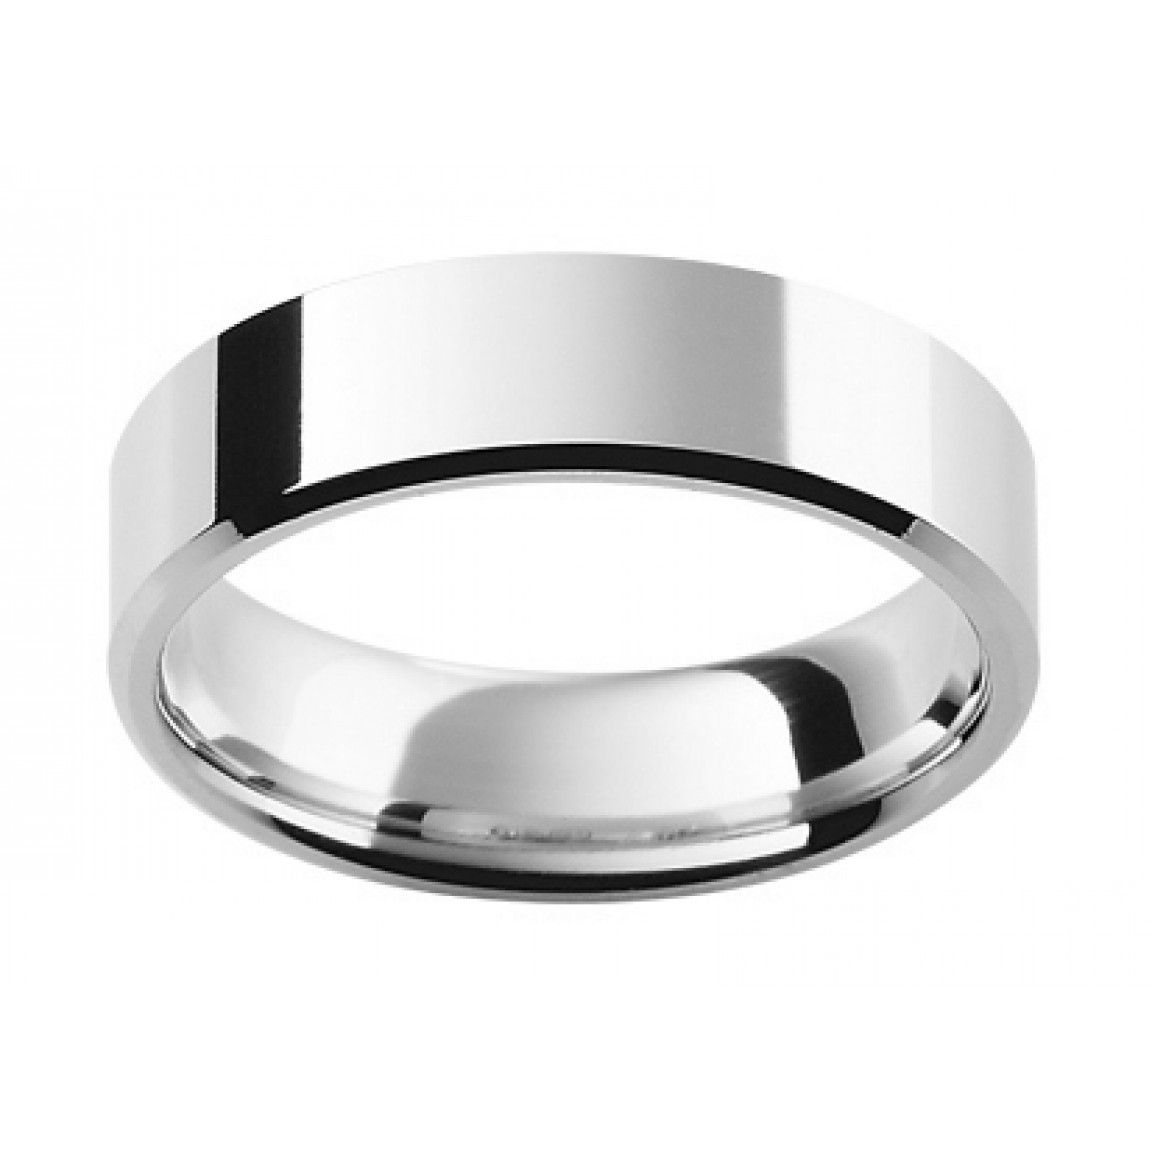 Platinum 950 Wedding Rings